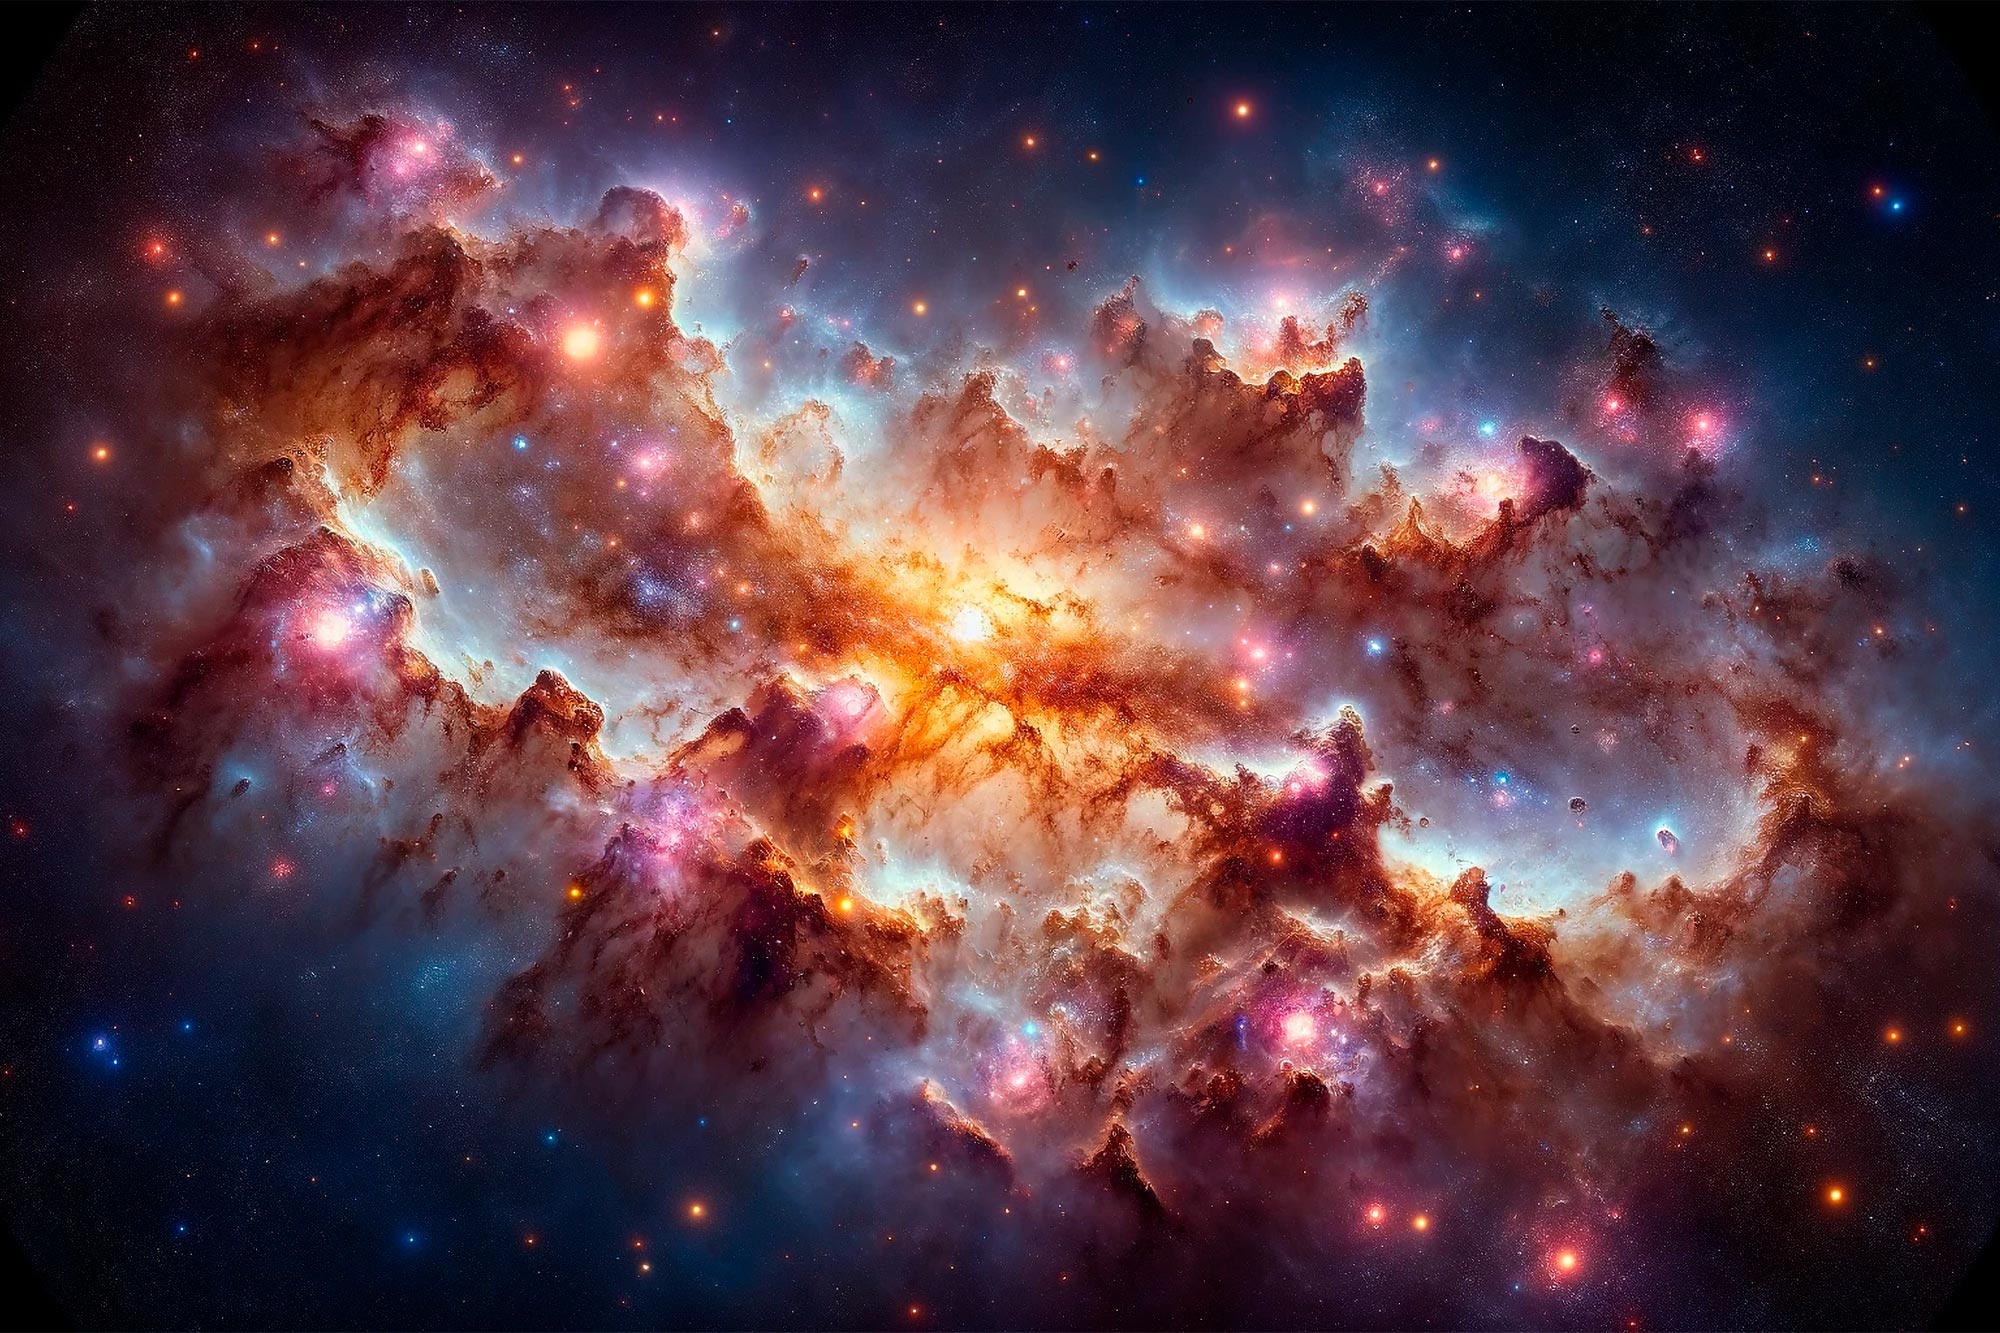 Teleskop Luar Angkasa Webb menemukan struktur yang tidak dapat dijelaskan di jantung Bima Sakti